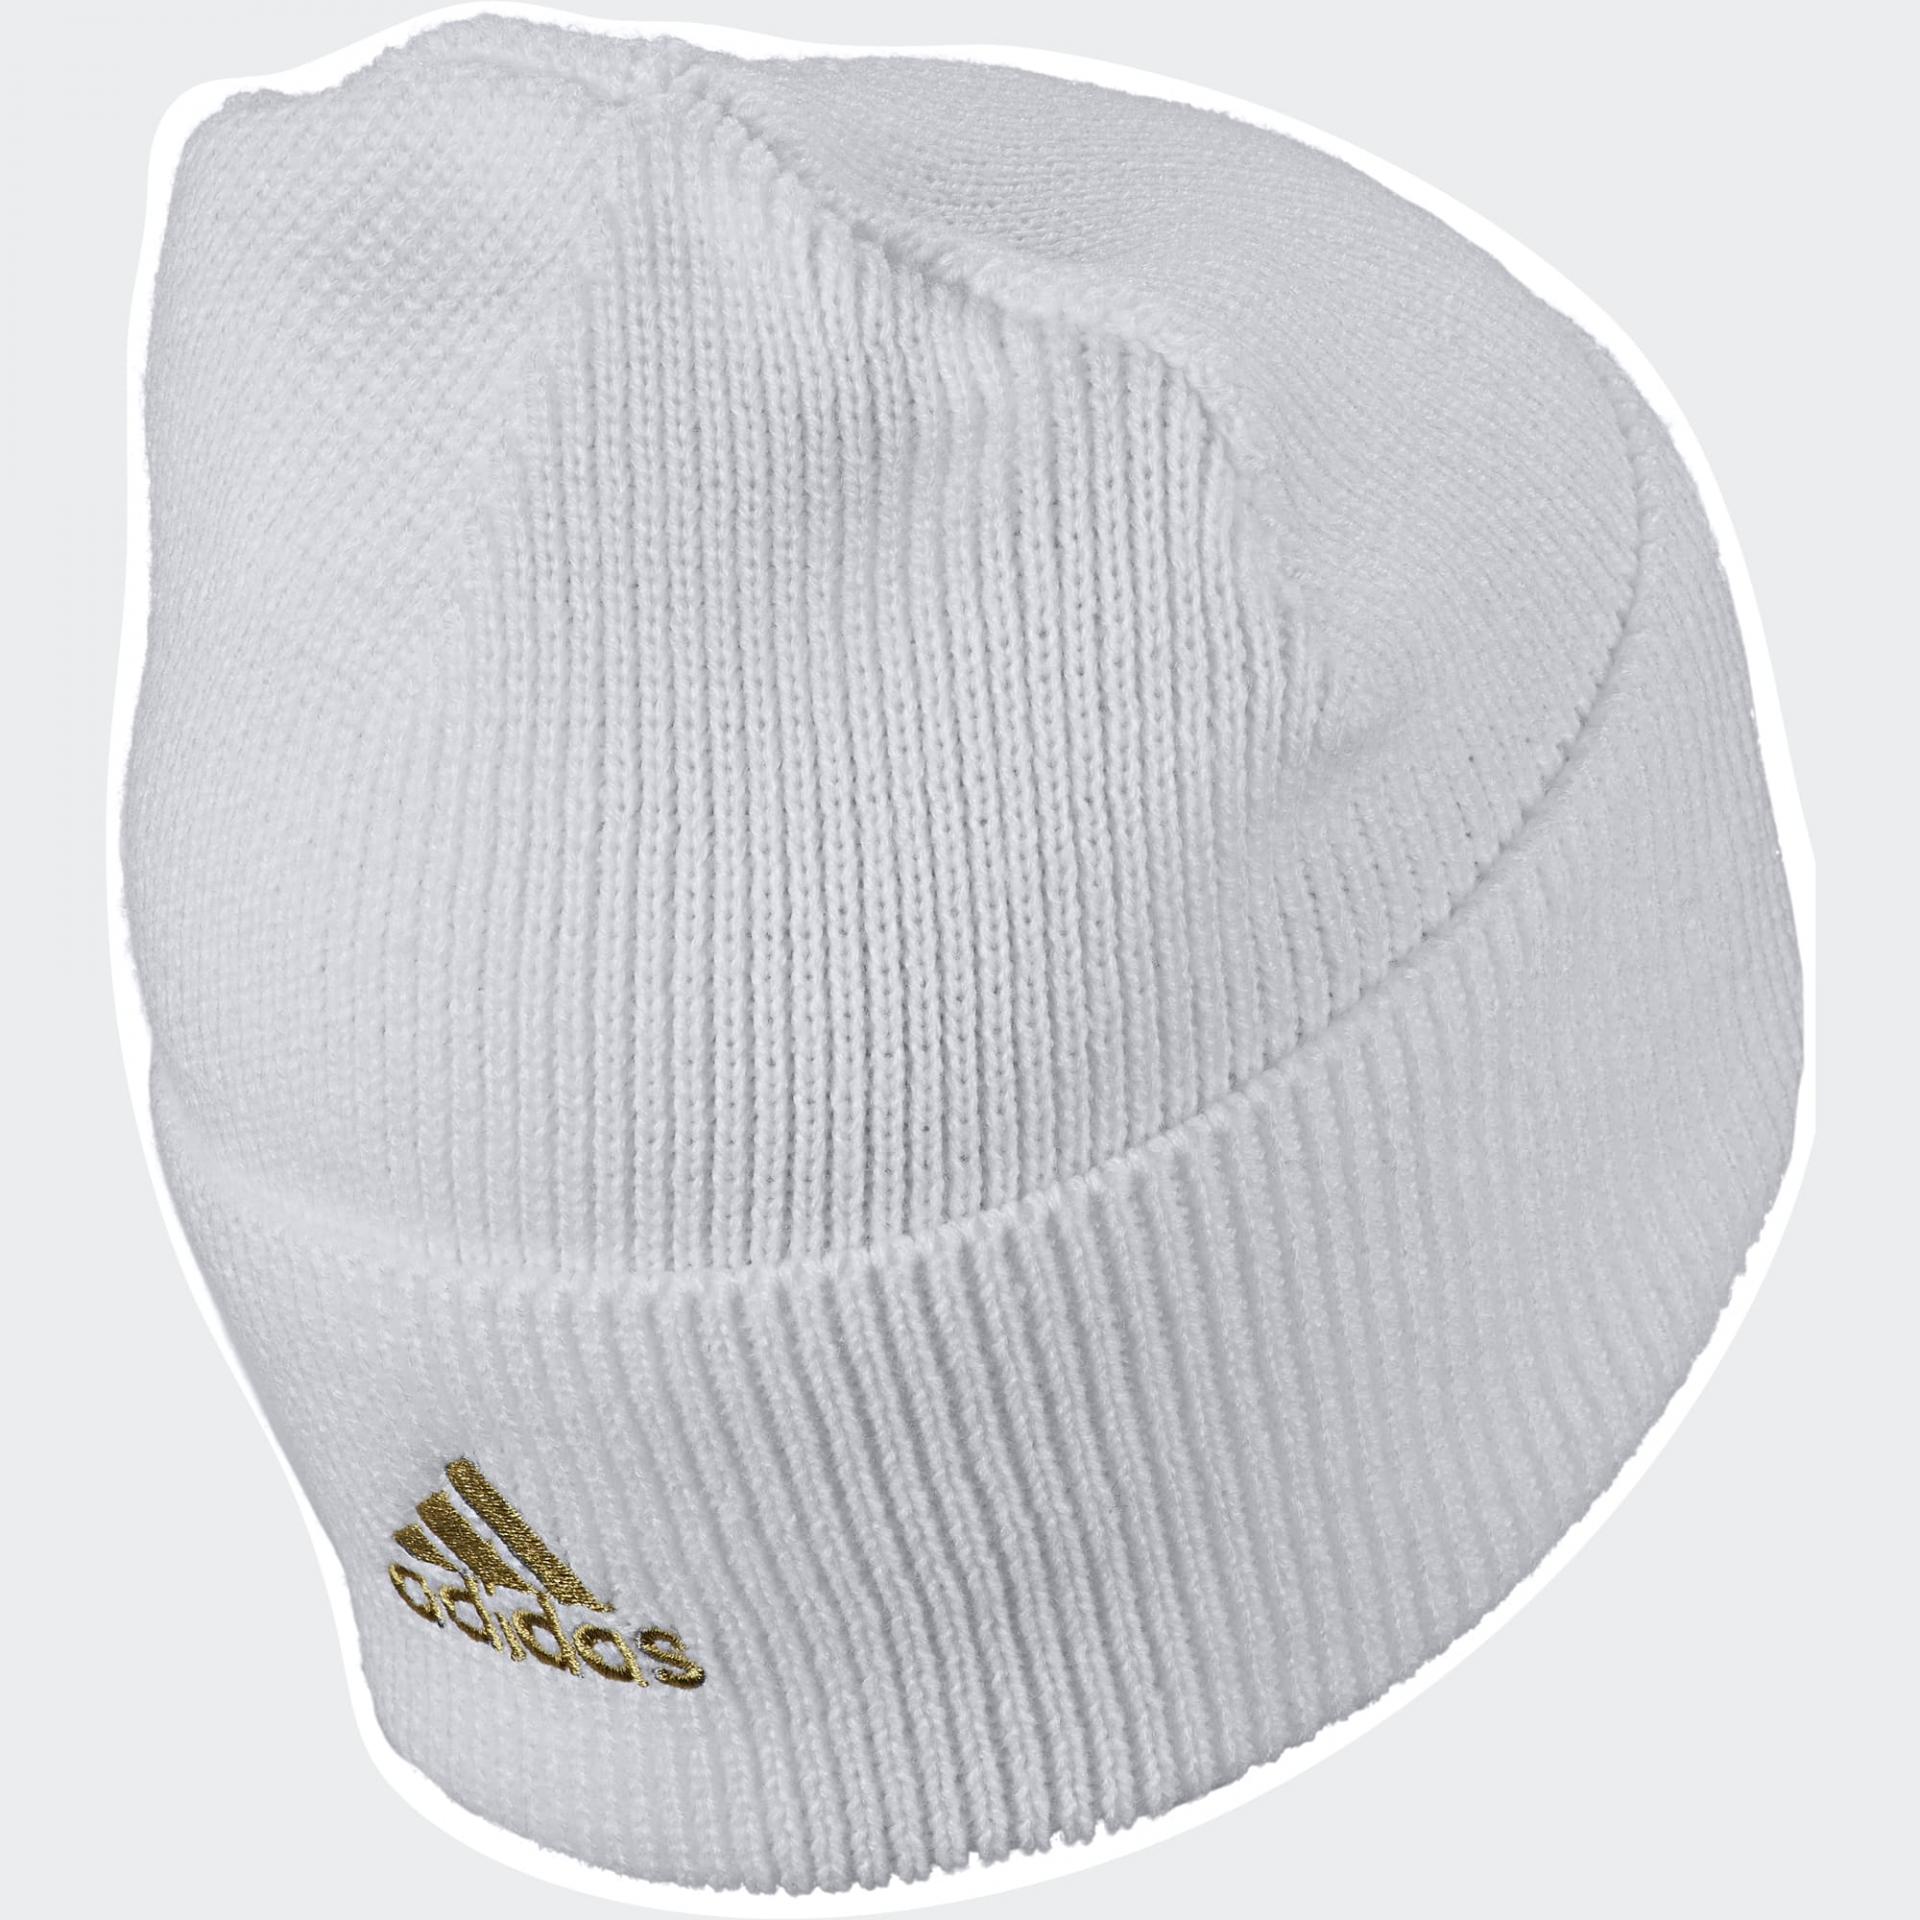 Real Madrid Adidas gorra para nino OSFY